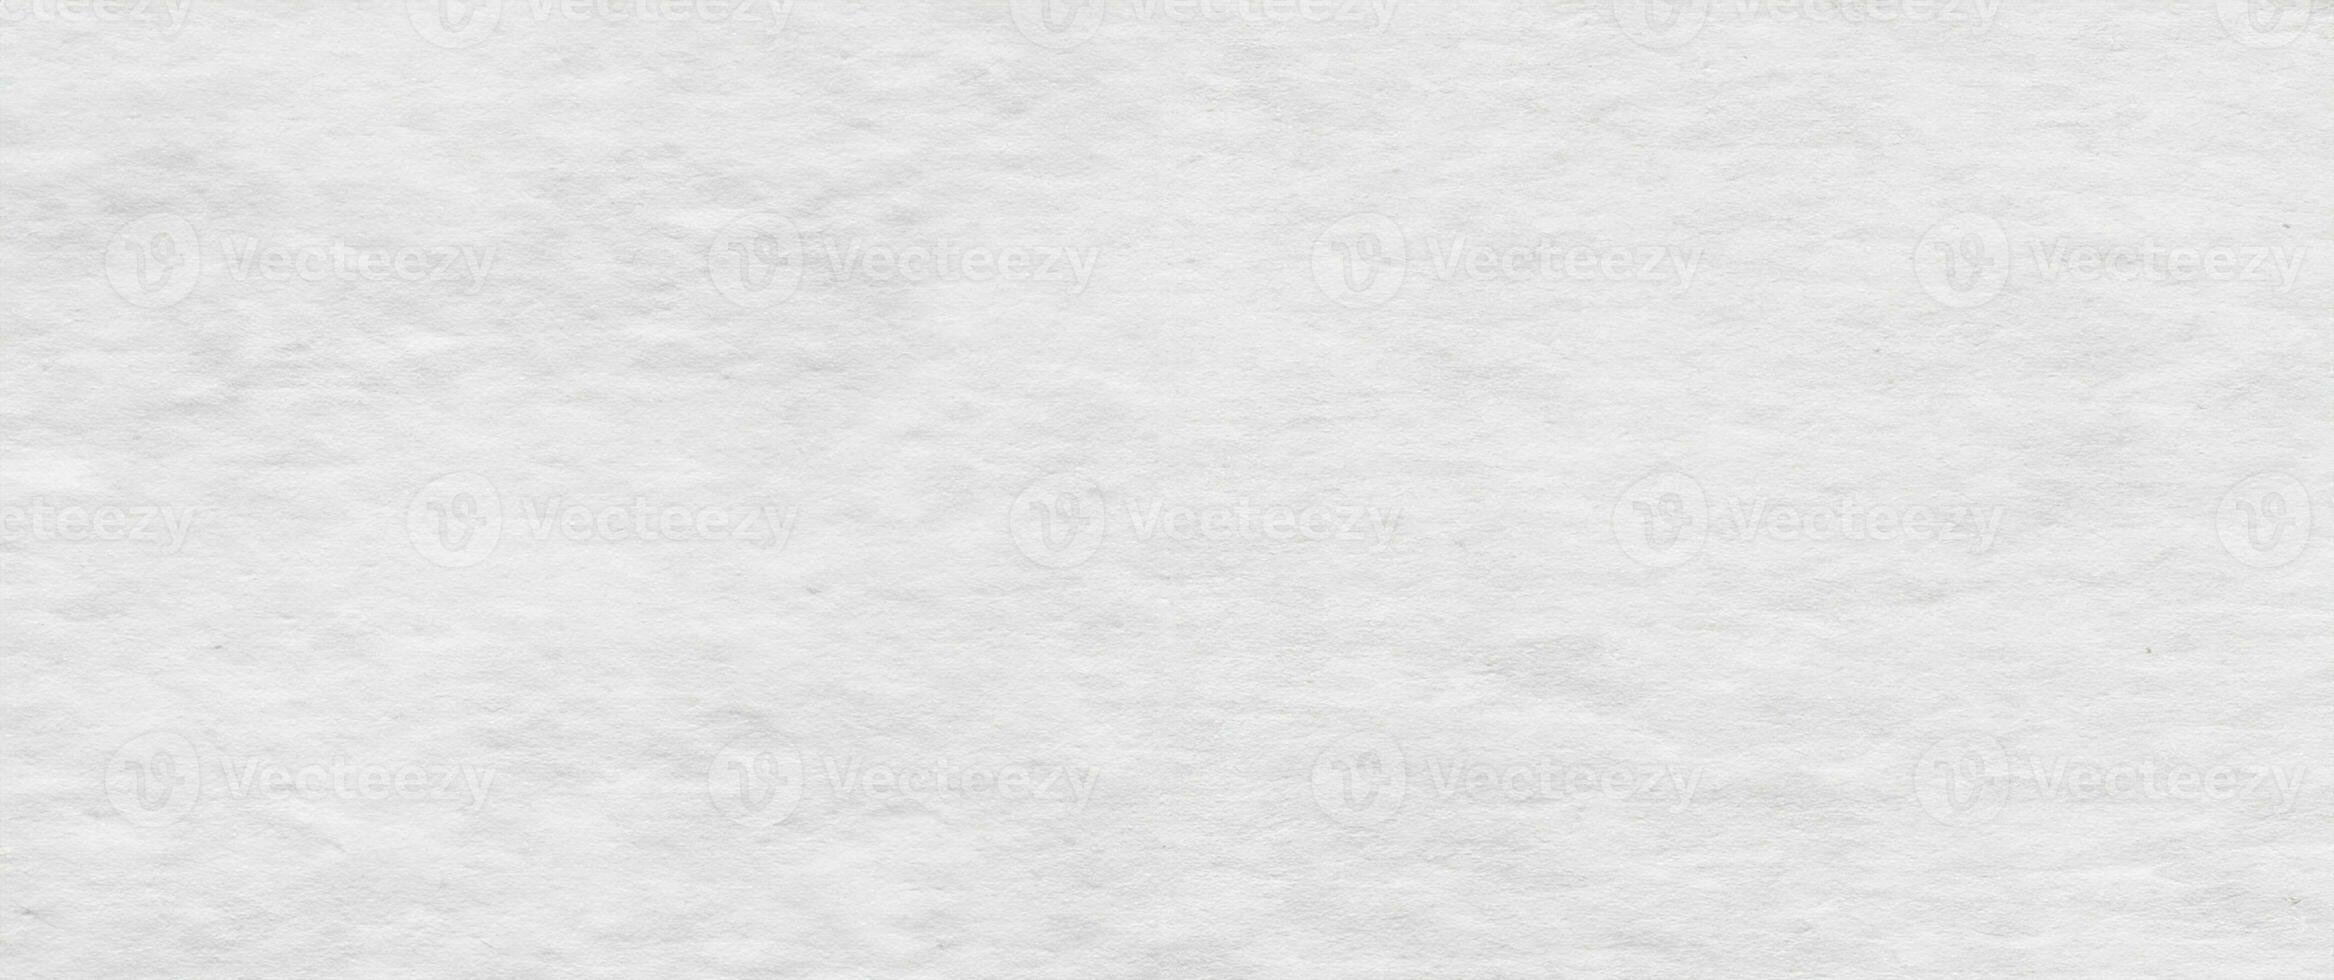 white paper texture canvas background photo